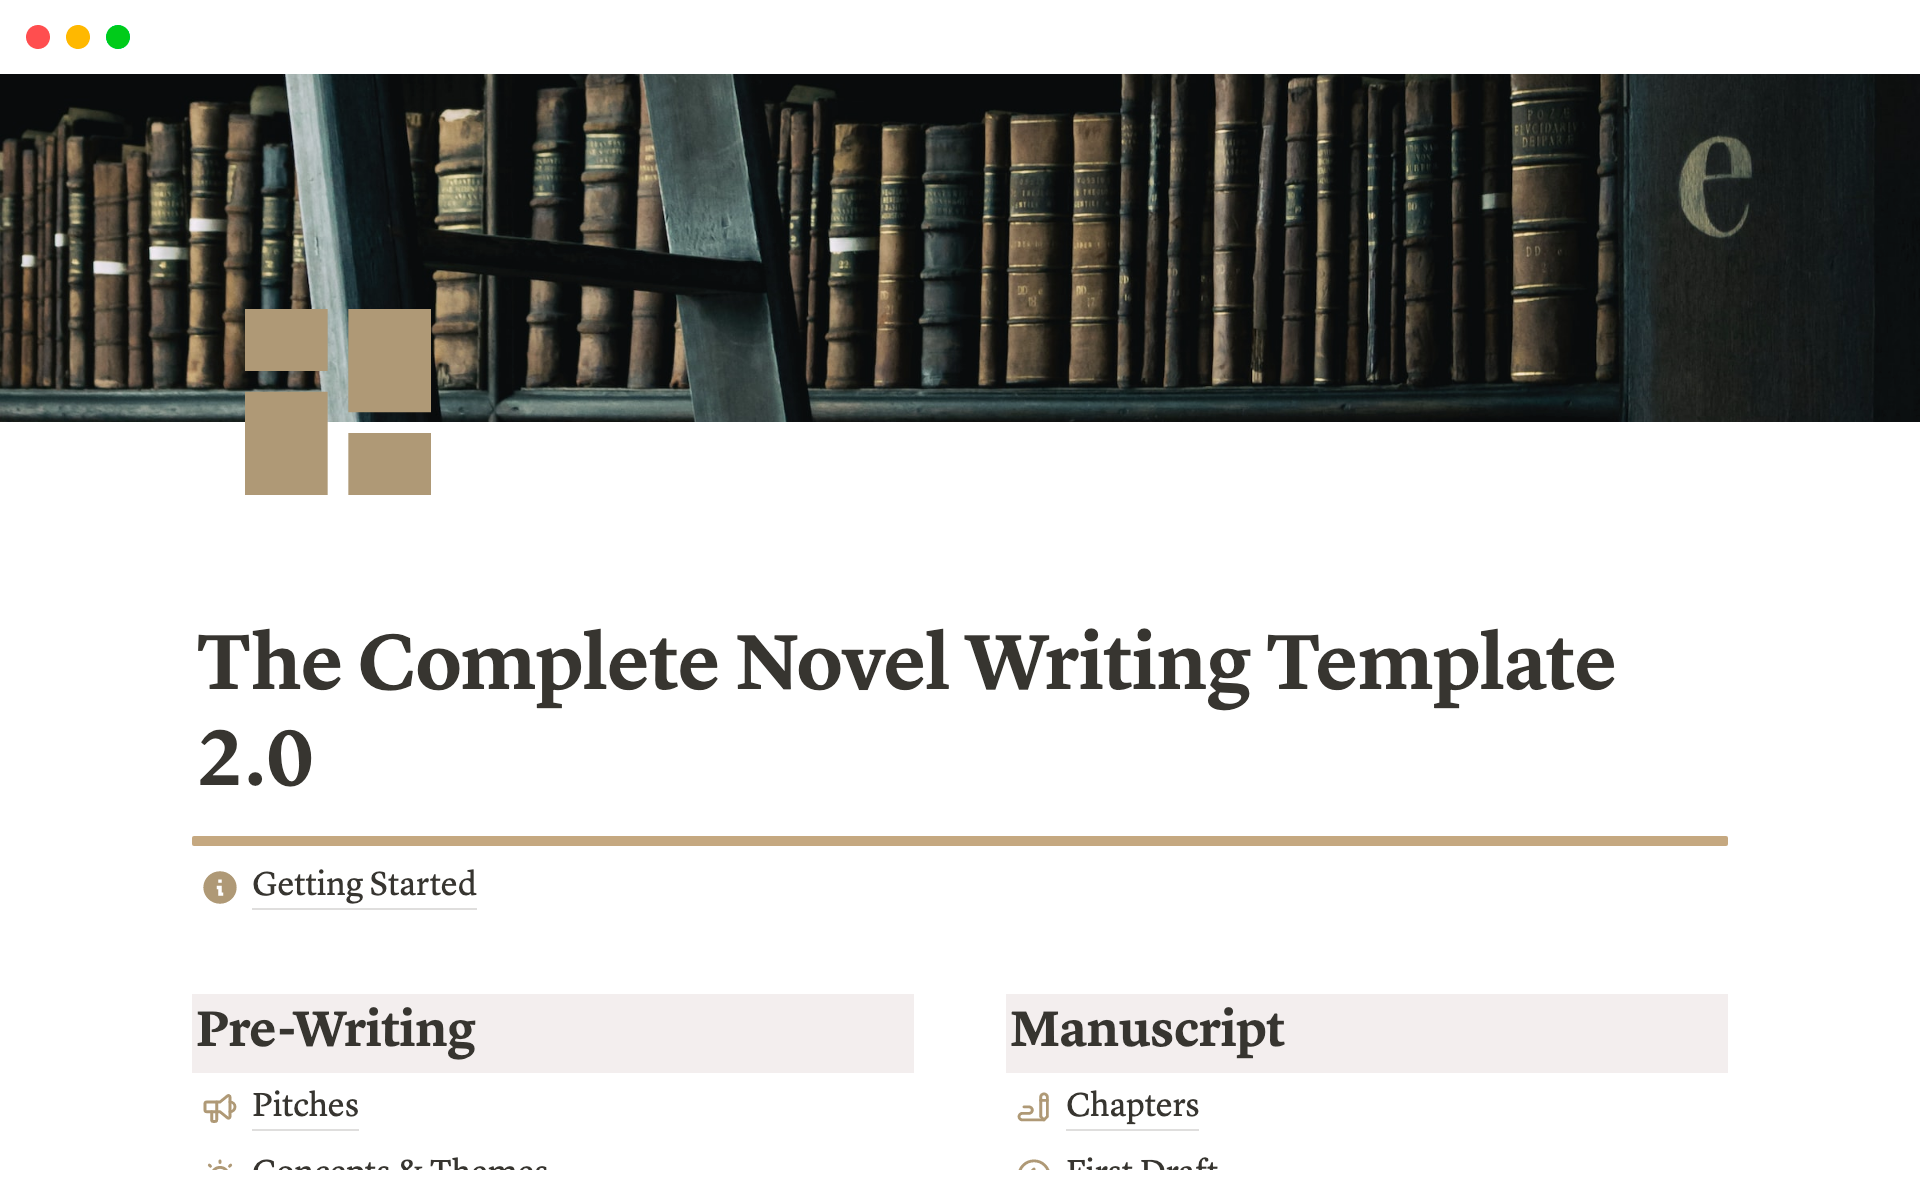 Aperçu du modèle de The Complete Novel Writing Template 2.0